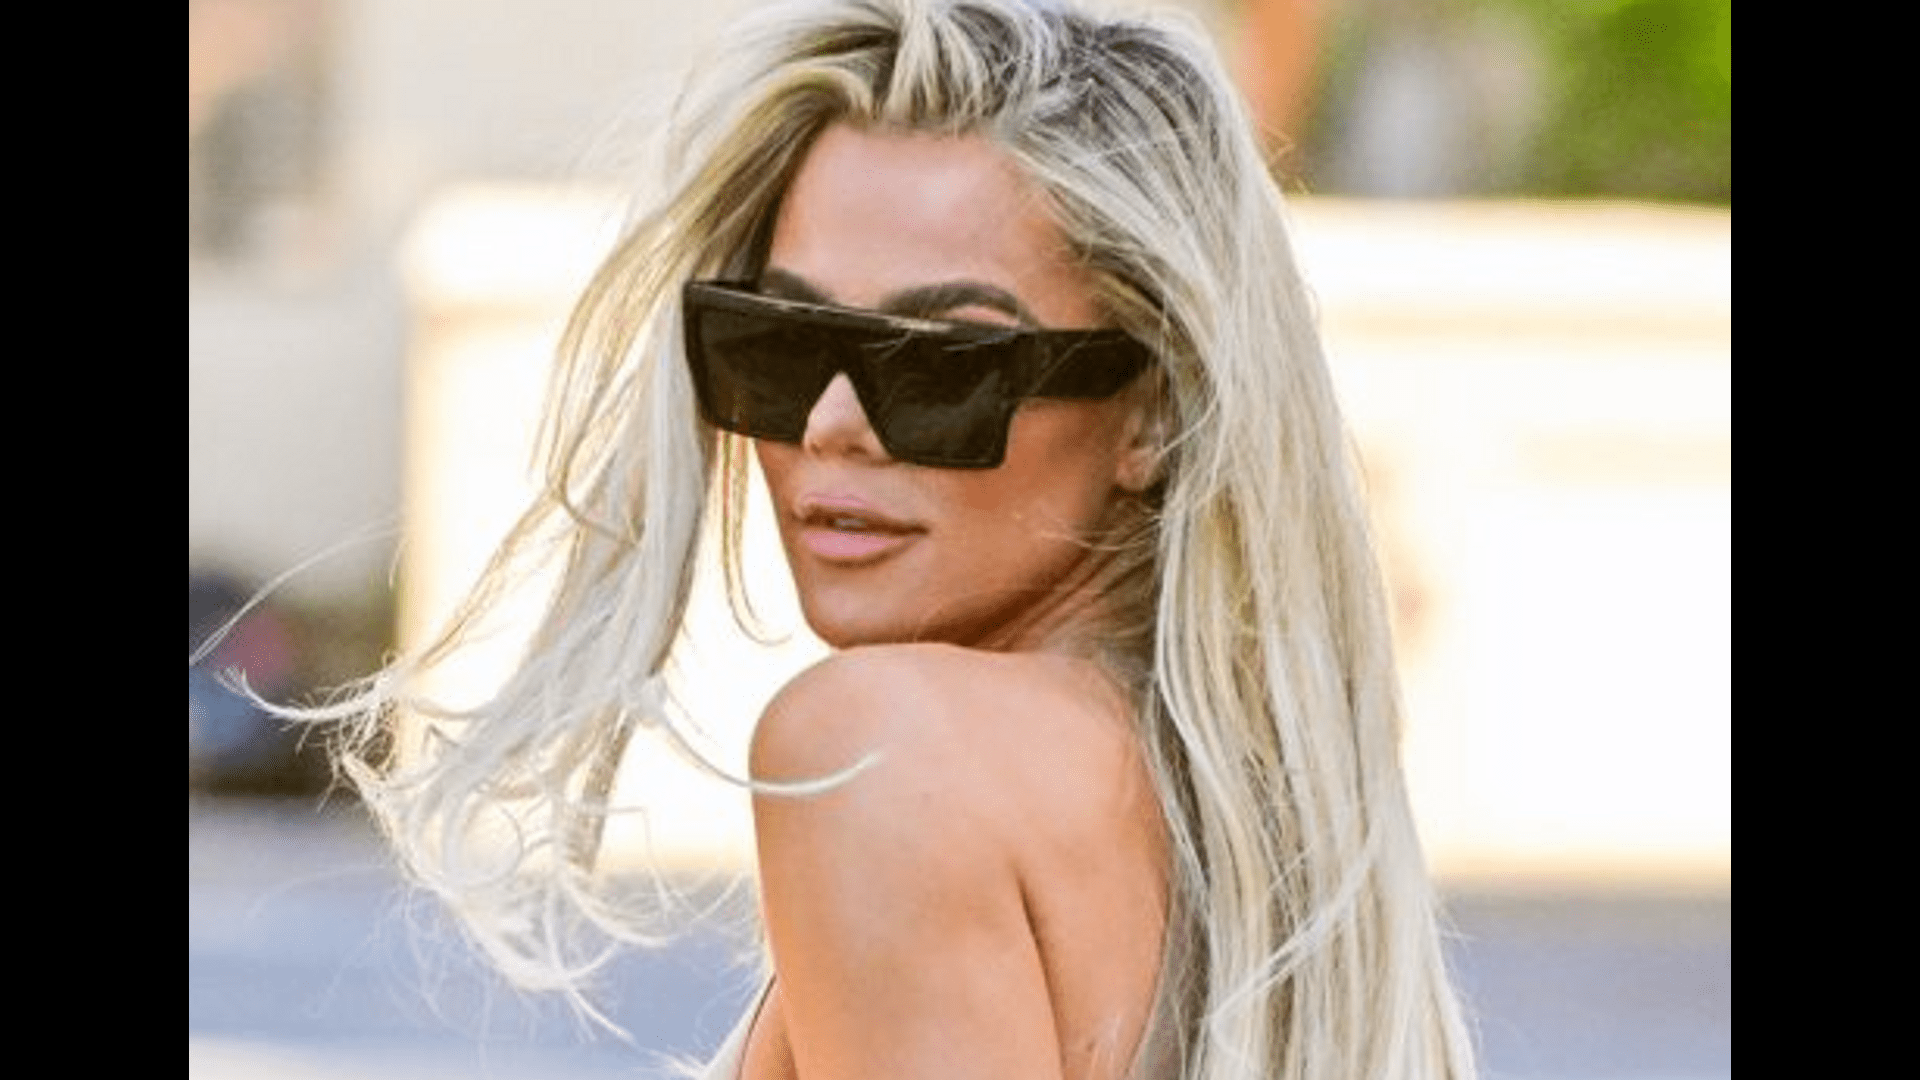 khloe-kardashian-denies-rumors-of-buttock-implants-and-plastic-surgery